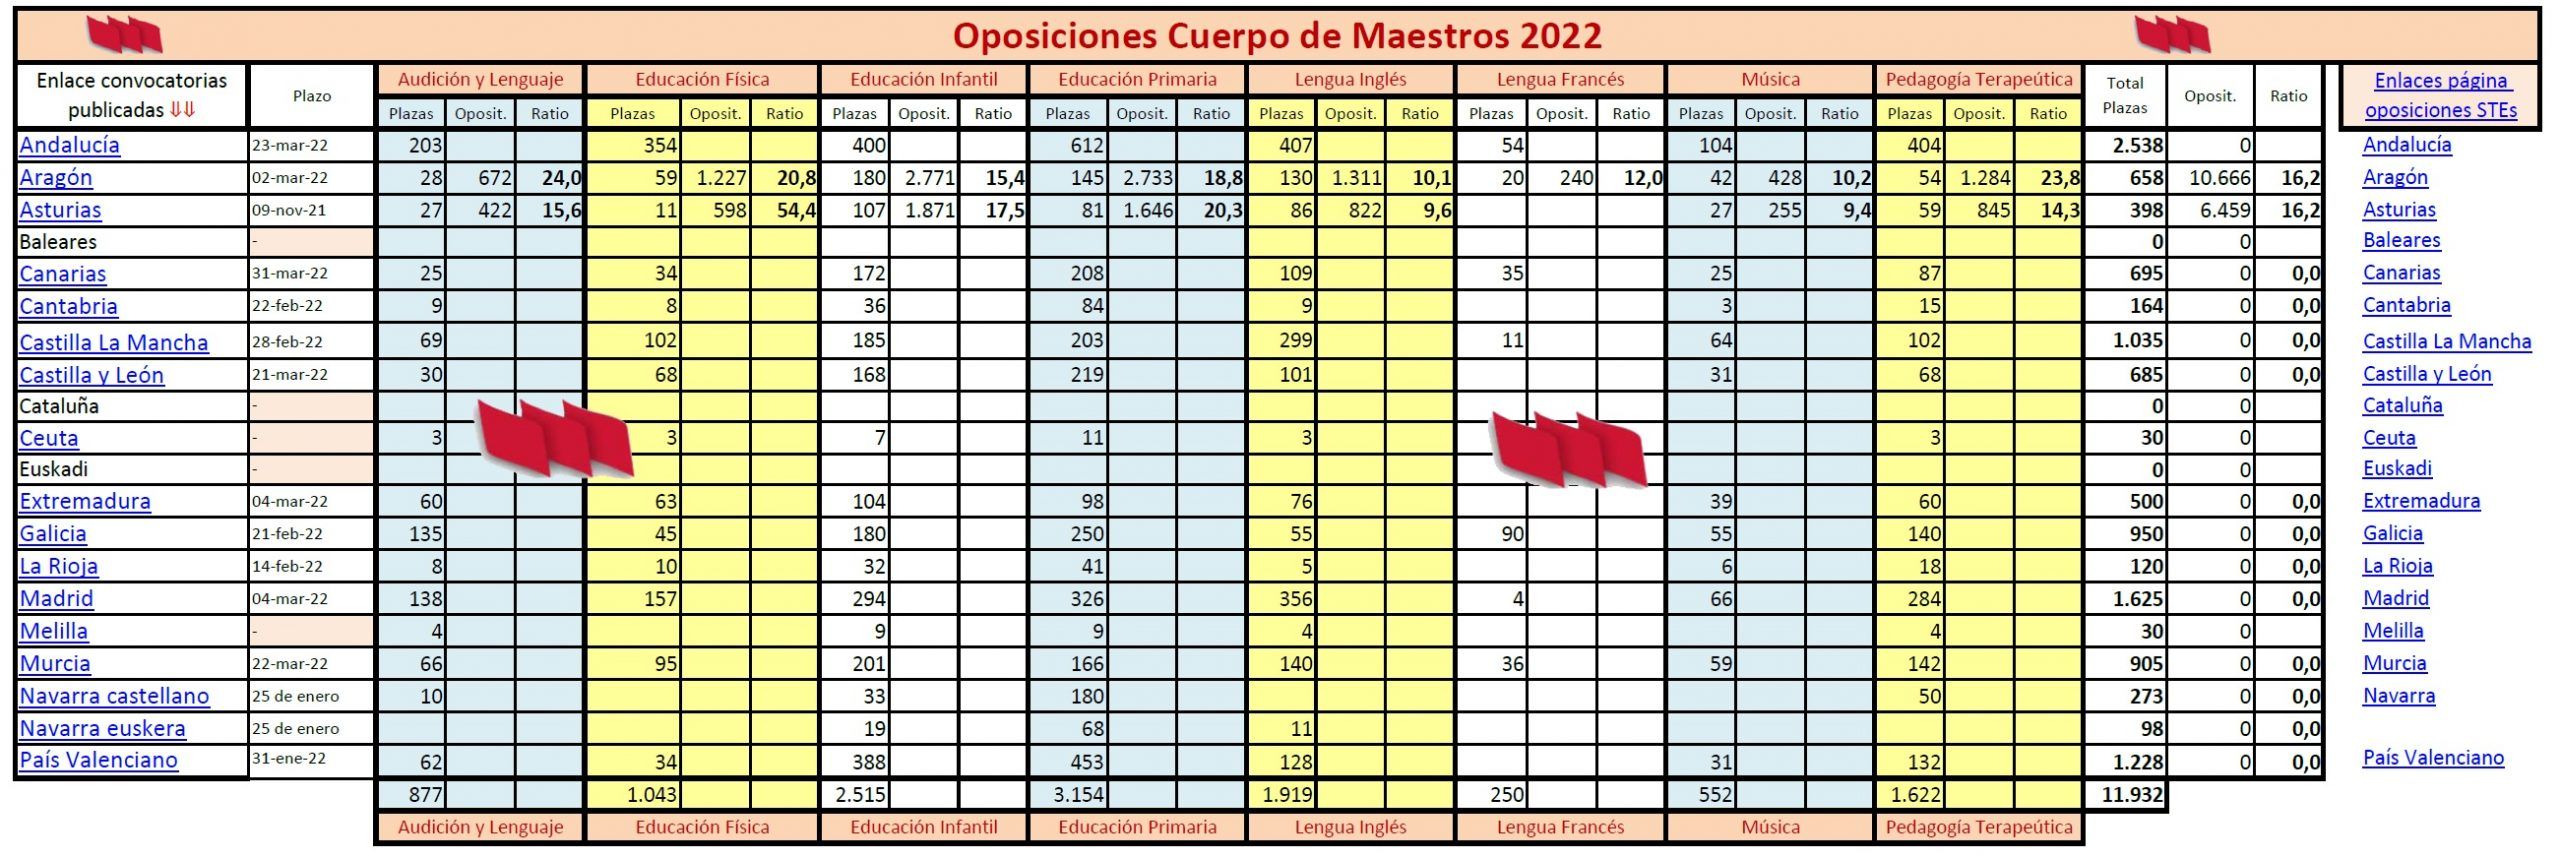 OEP-2022-Maestros-Ratios